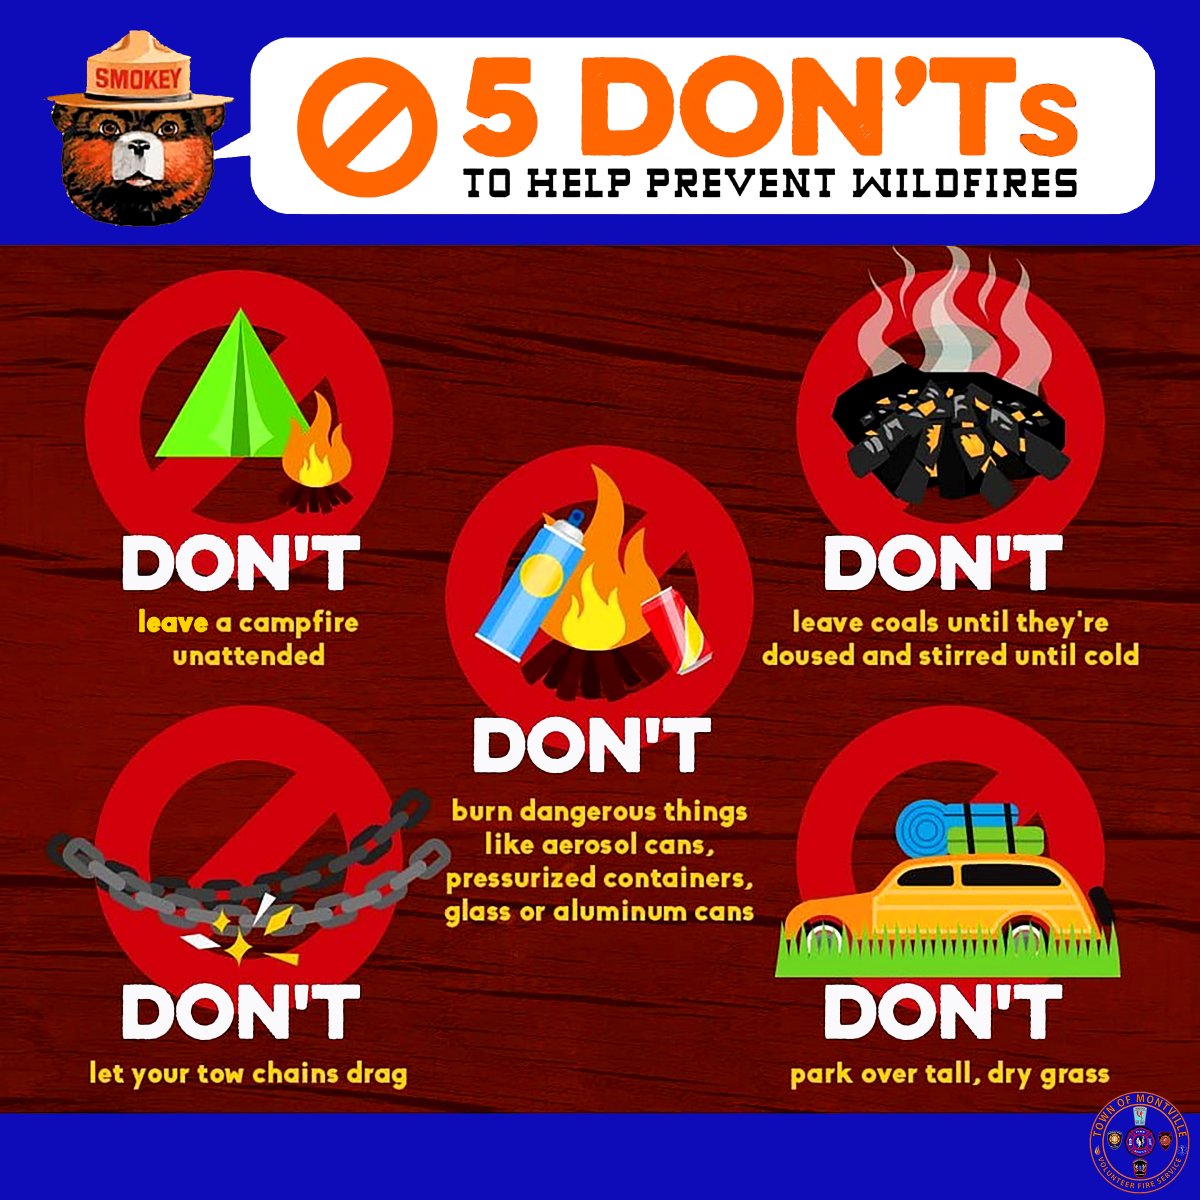 5 Don'ts To Help Prevent Wildfires. 

#OnlyYouCanPreventForestFires

#MTVCT #Montville #MontvilleCT #CT #Connecticut #WX #WXCT #CTWX @CTDEEPNews